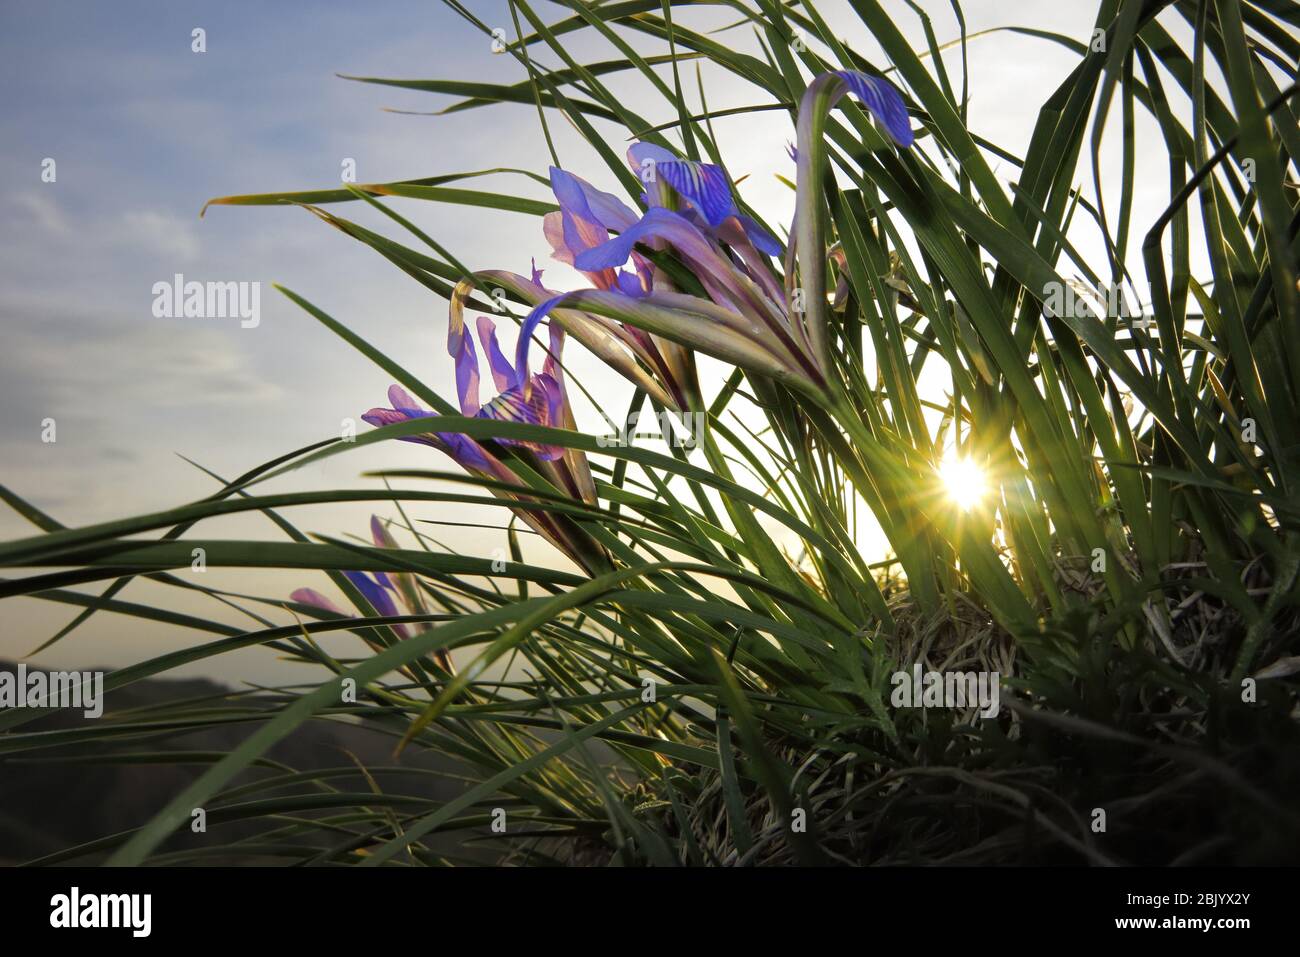 A wild iris in natural habitat Stock Photo